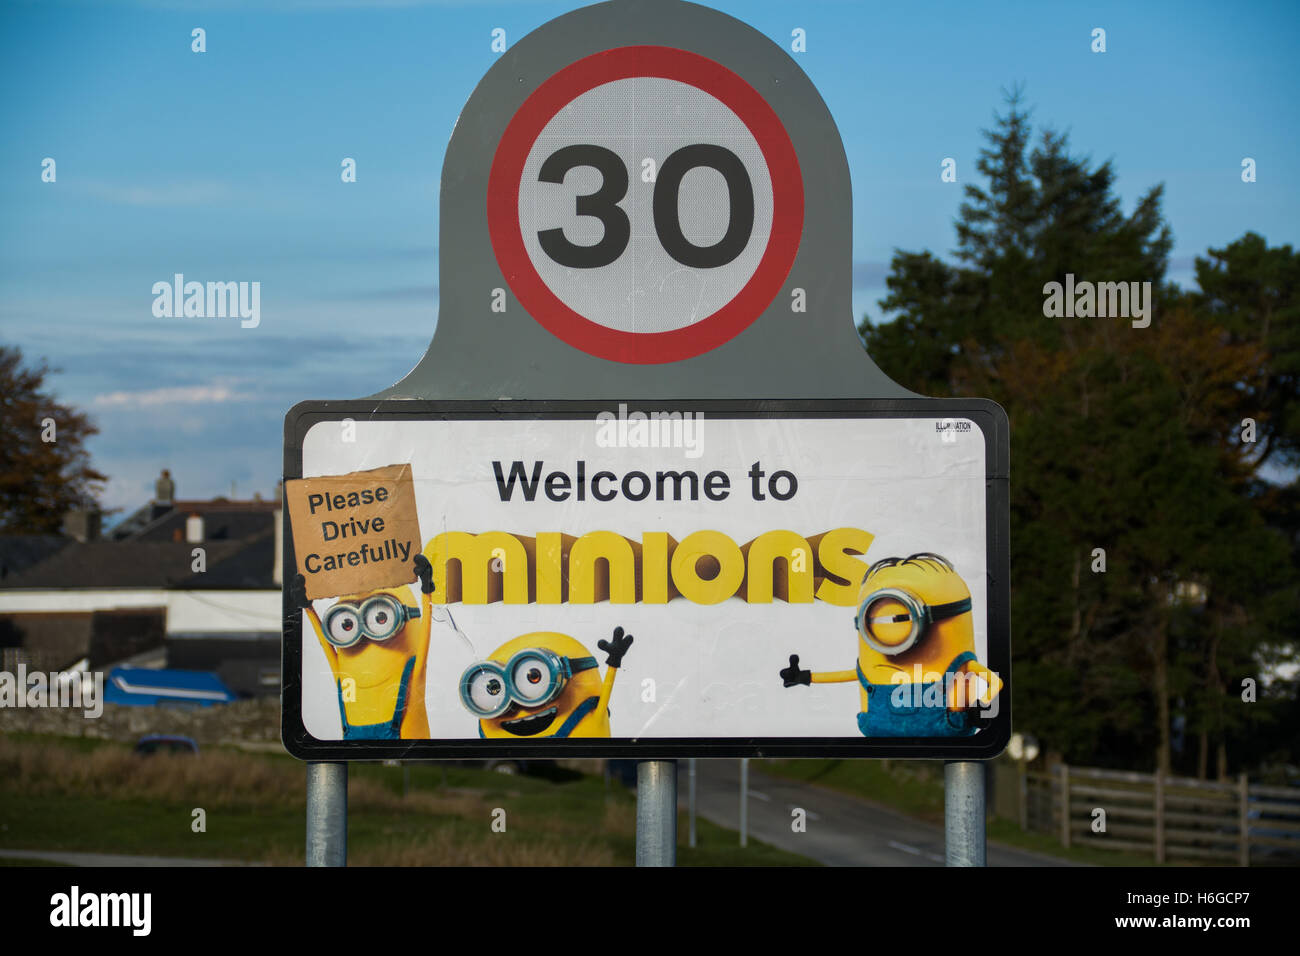 Minions road sign Stock Photo